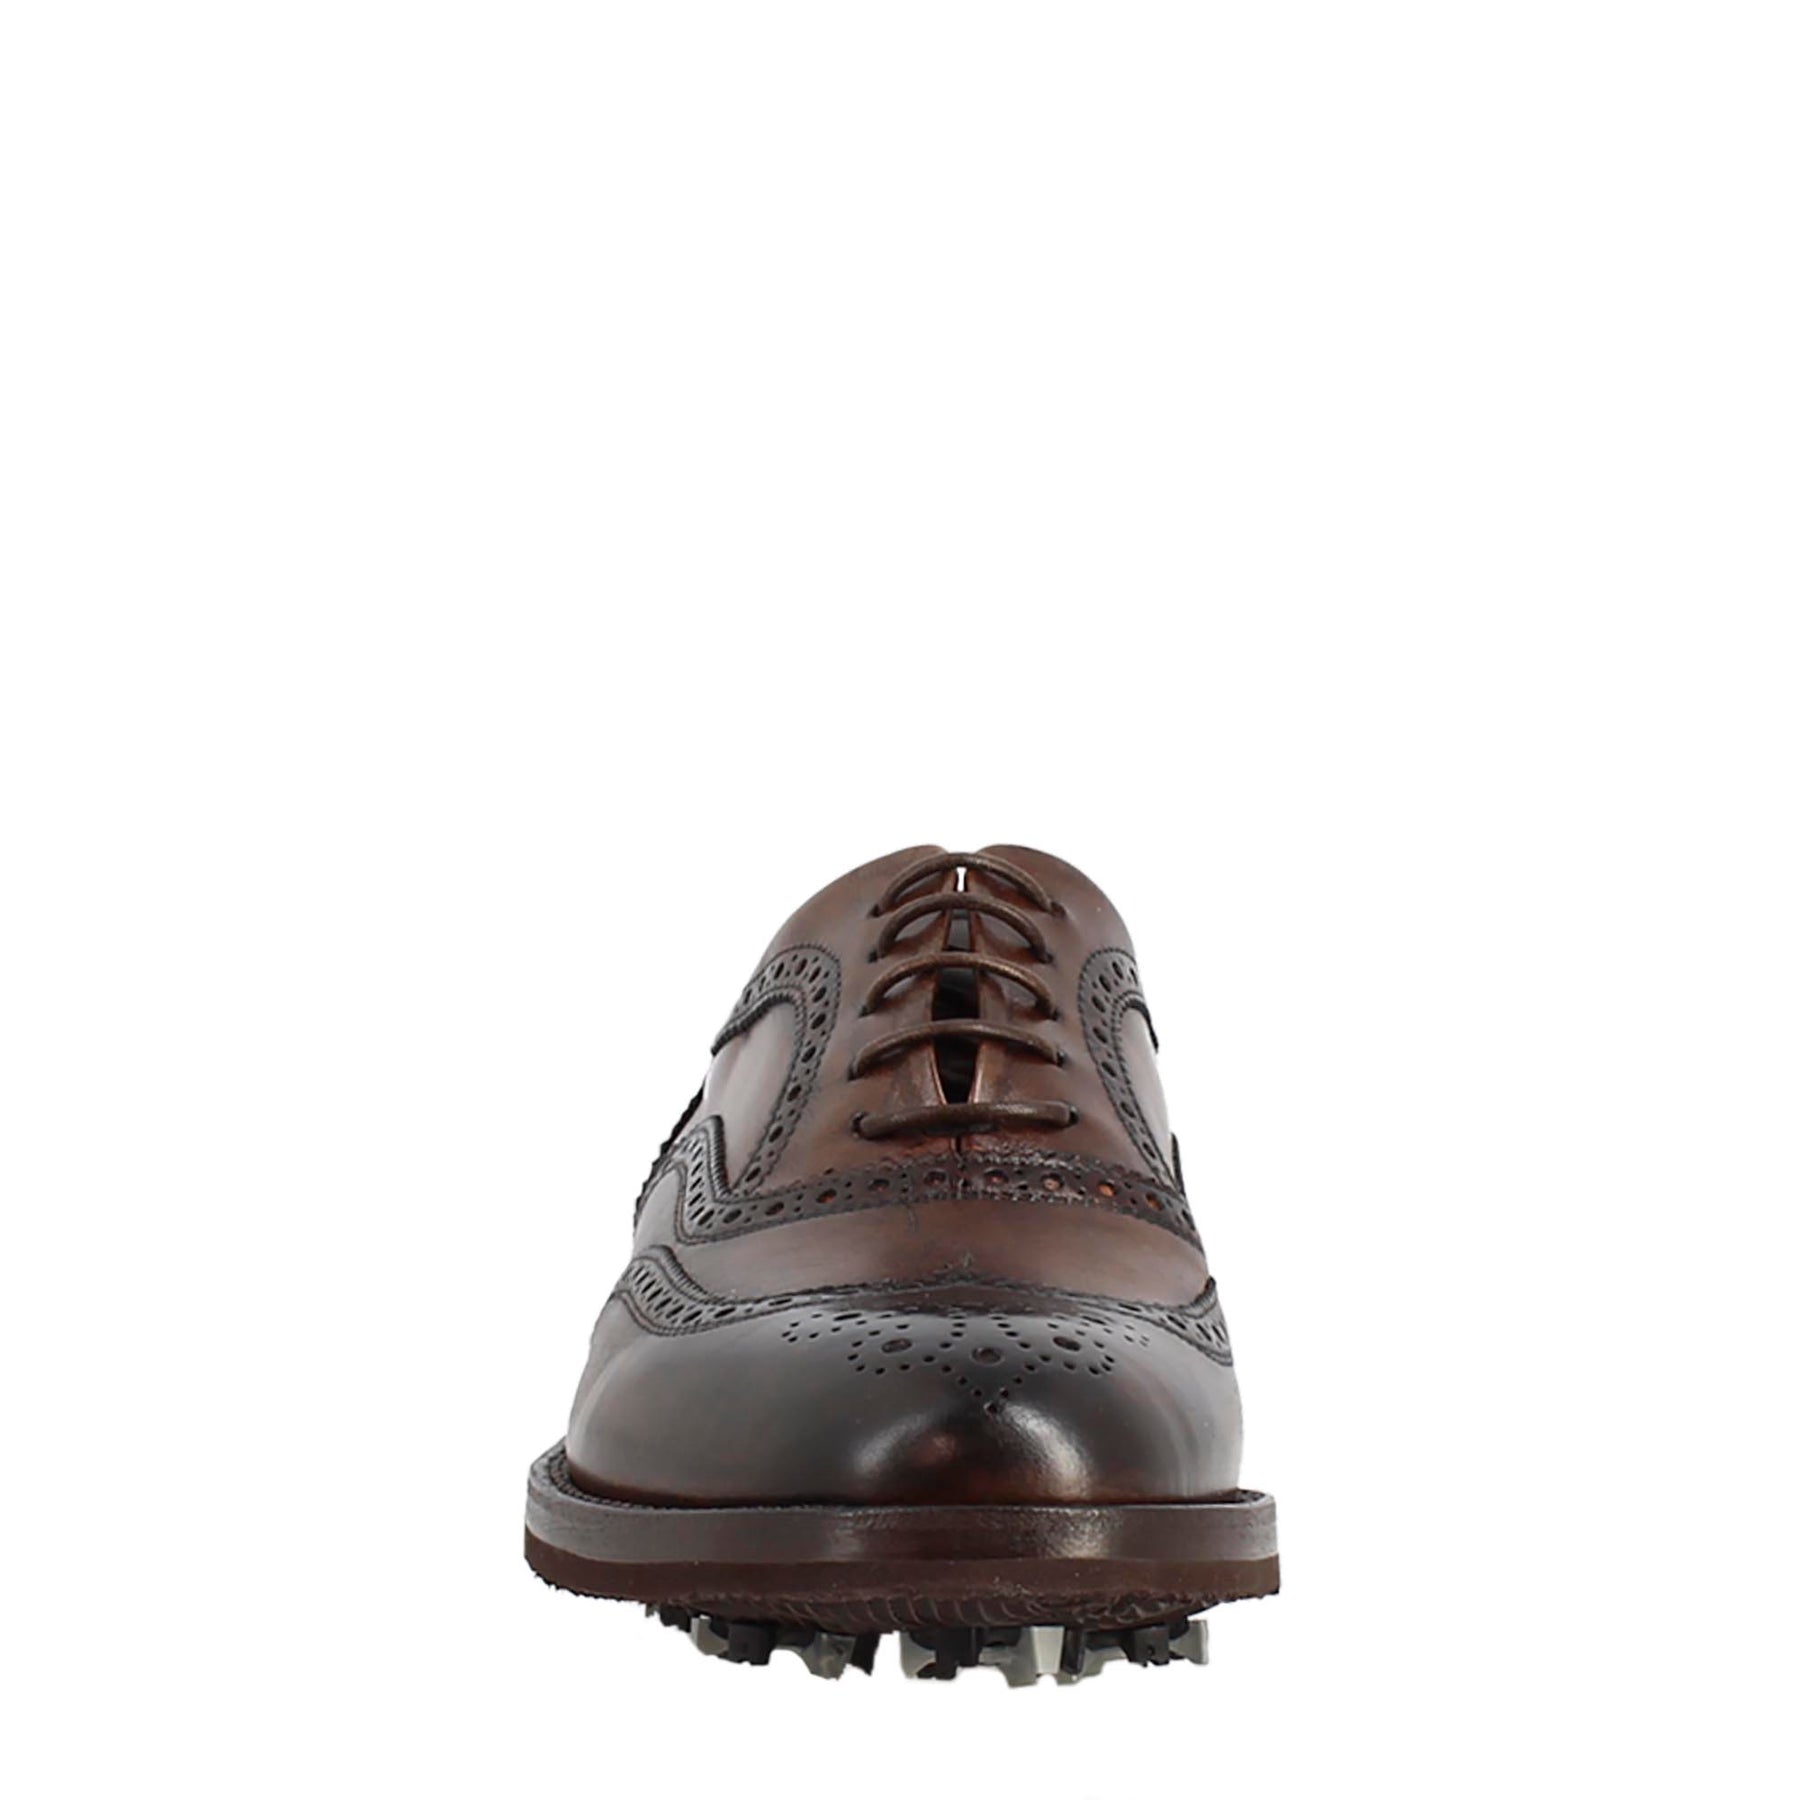 Chaussures de golf en cuir brogue marron fabriquées à la mainChaussures de golf en cuir brogue marron fabriquées à la main